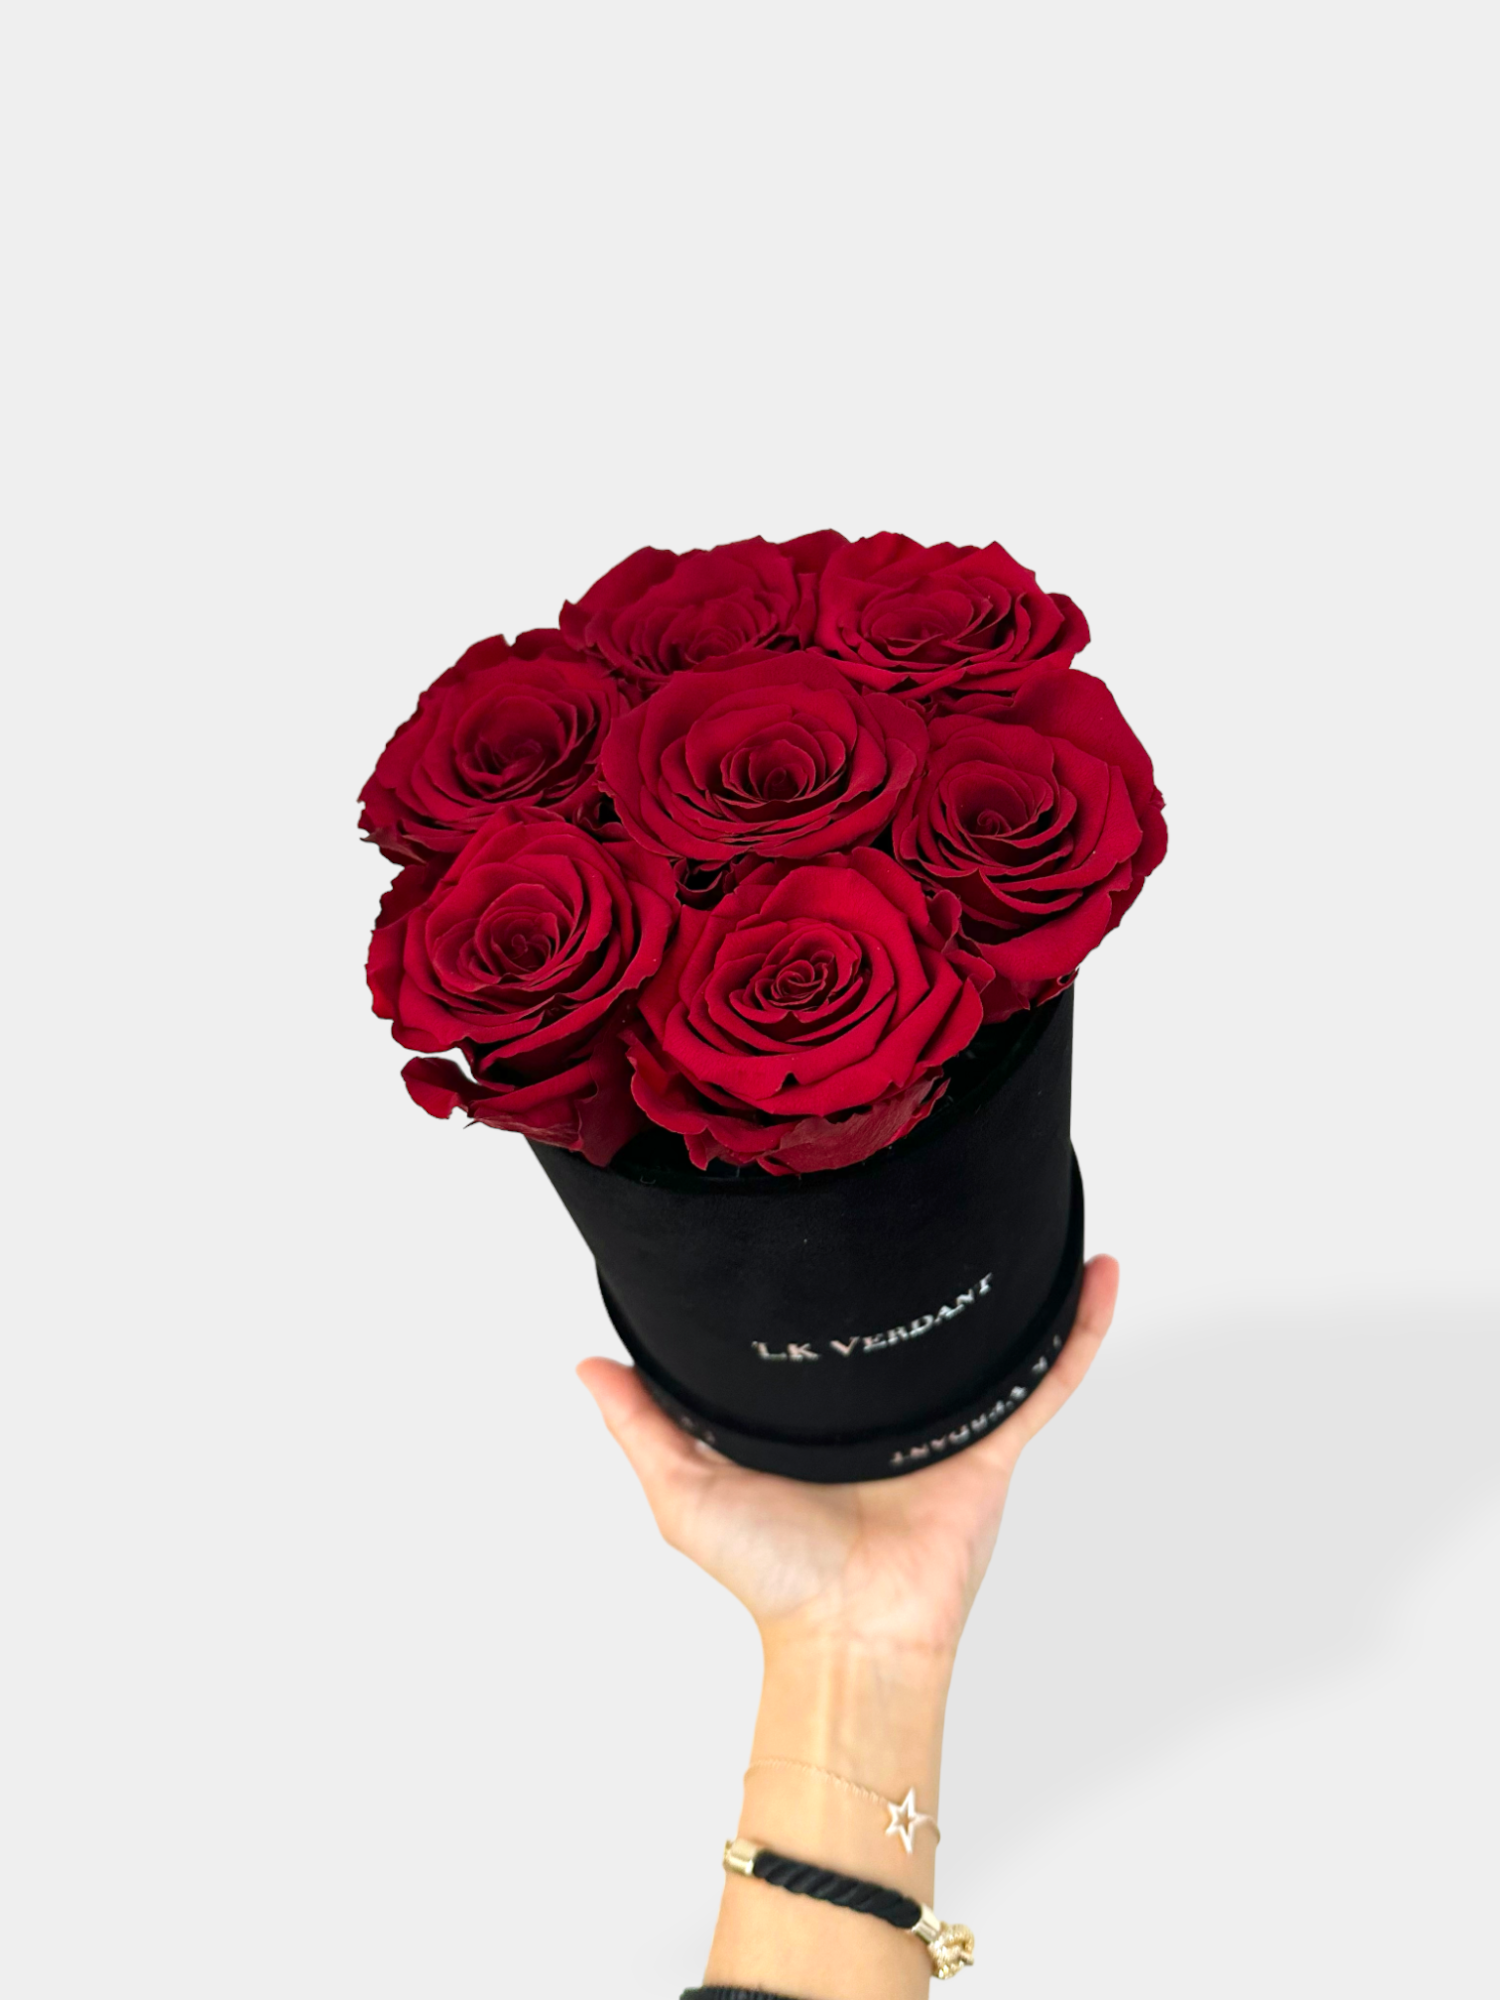 Large Forever Roses Hatbox | LK VERDANT